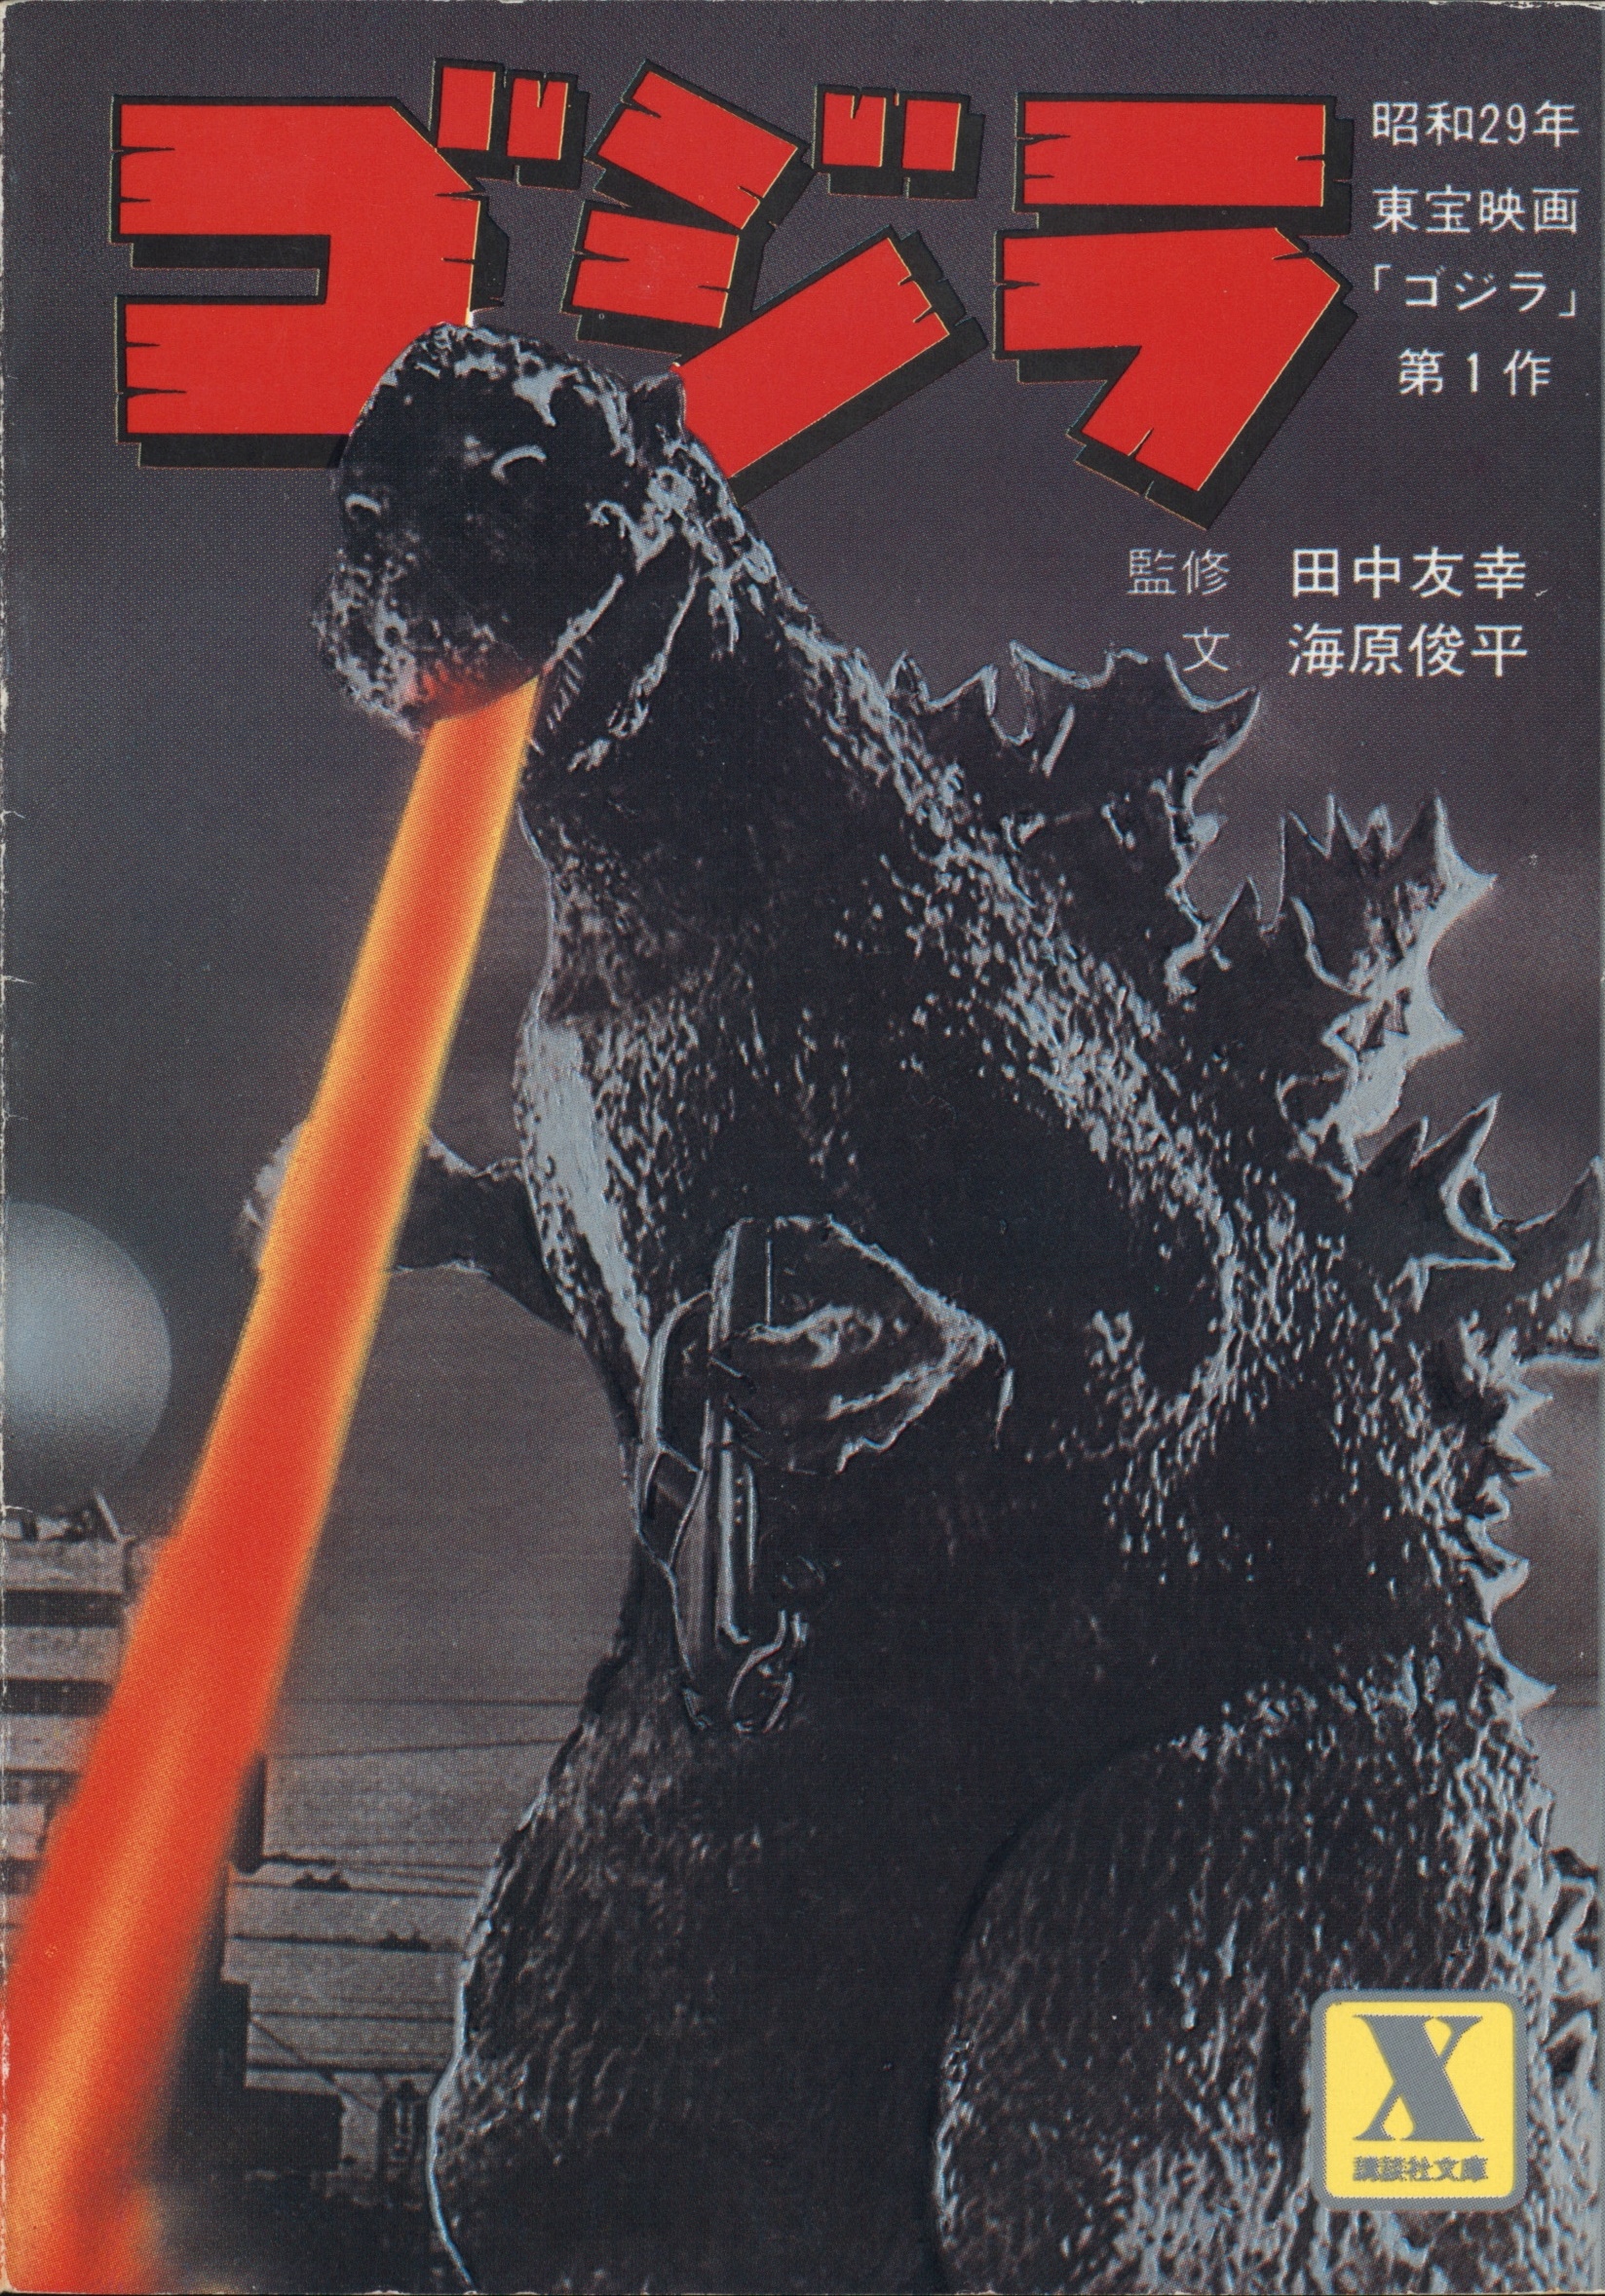 Godzilla x Kong: The New Empire - The Official Movie Novelization